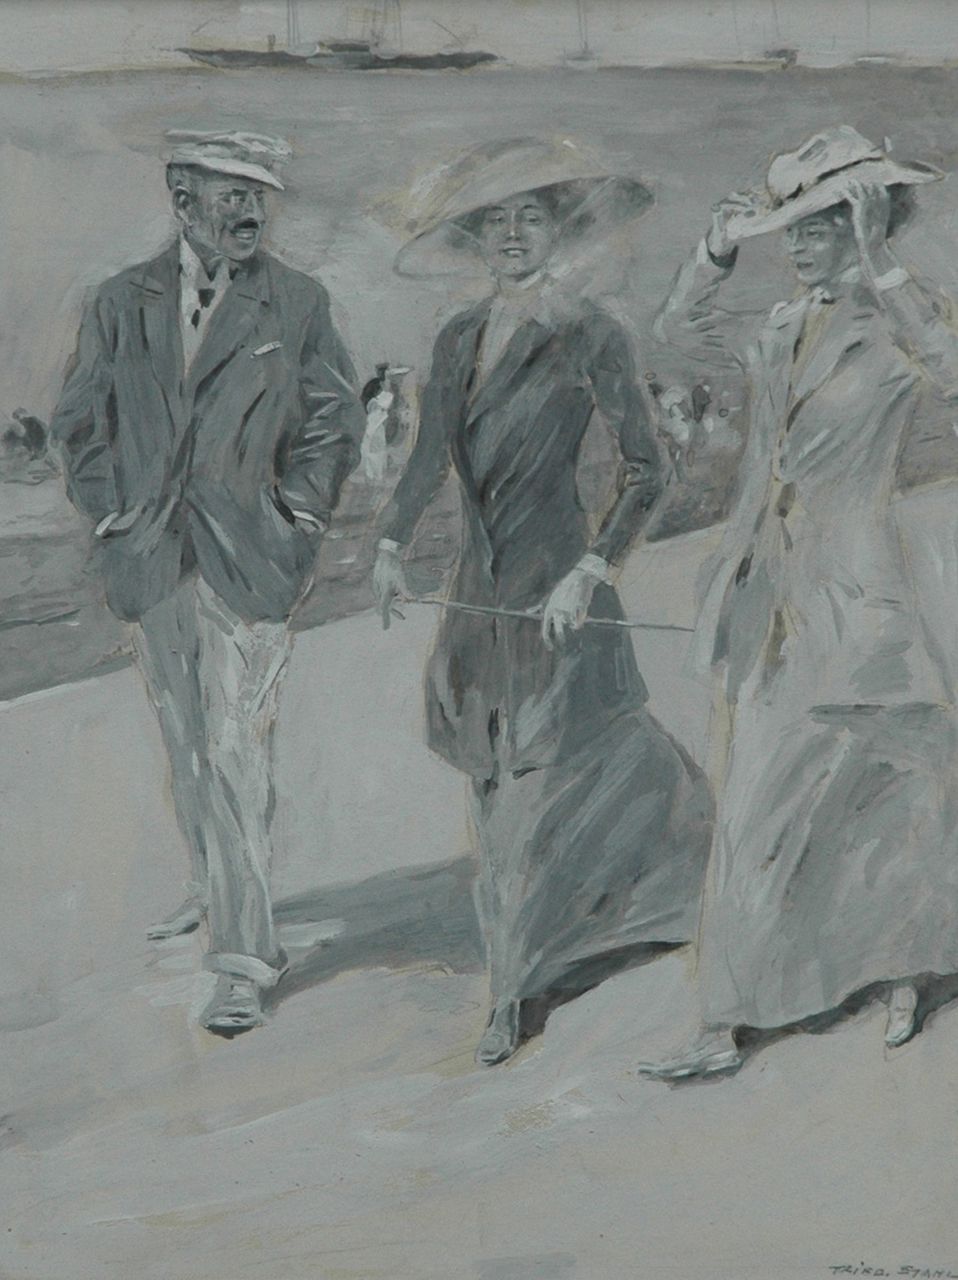 Stahl F.  | Friedrich Stahl, Strolling on the boulevard, gouache on cardboard 18.0 x 23.5 cm, signed l.r.